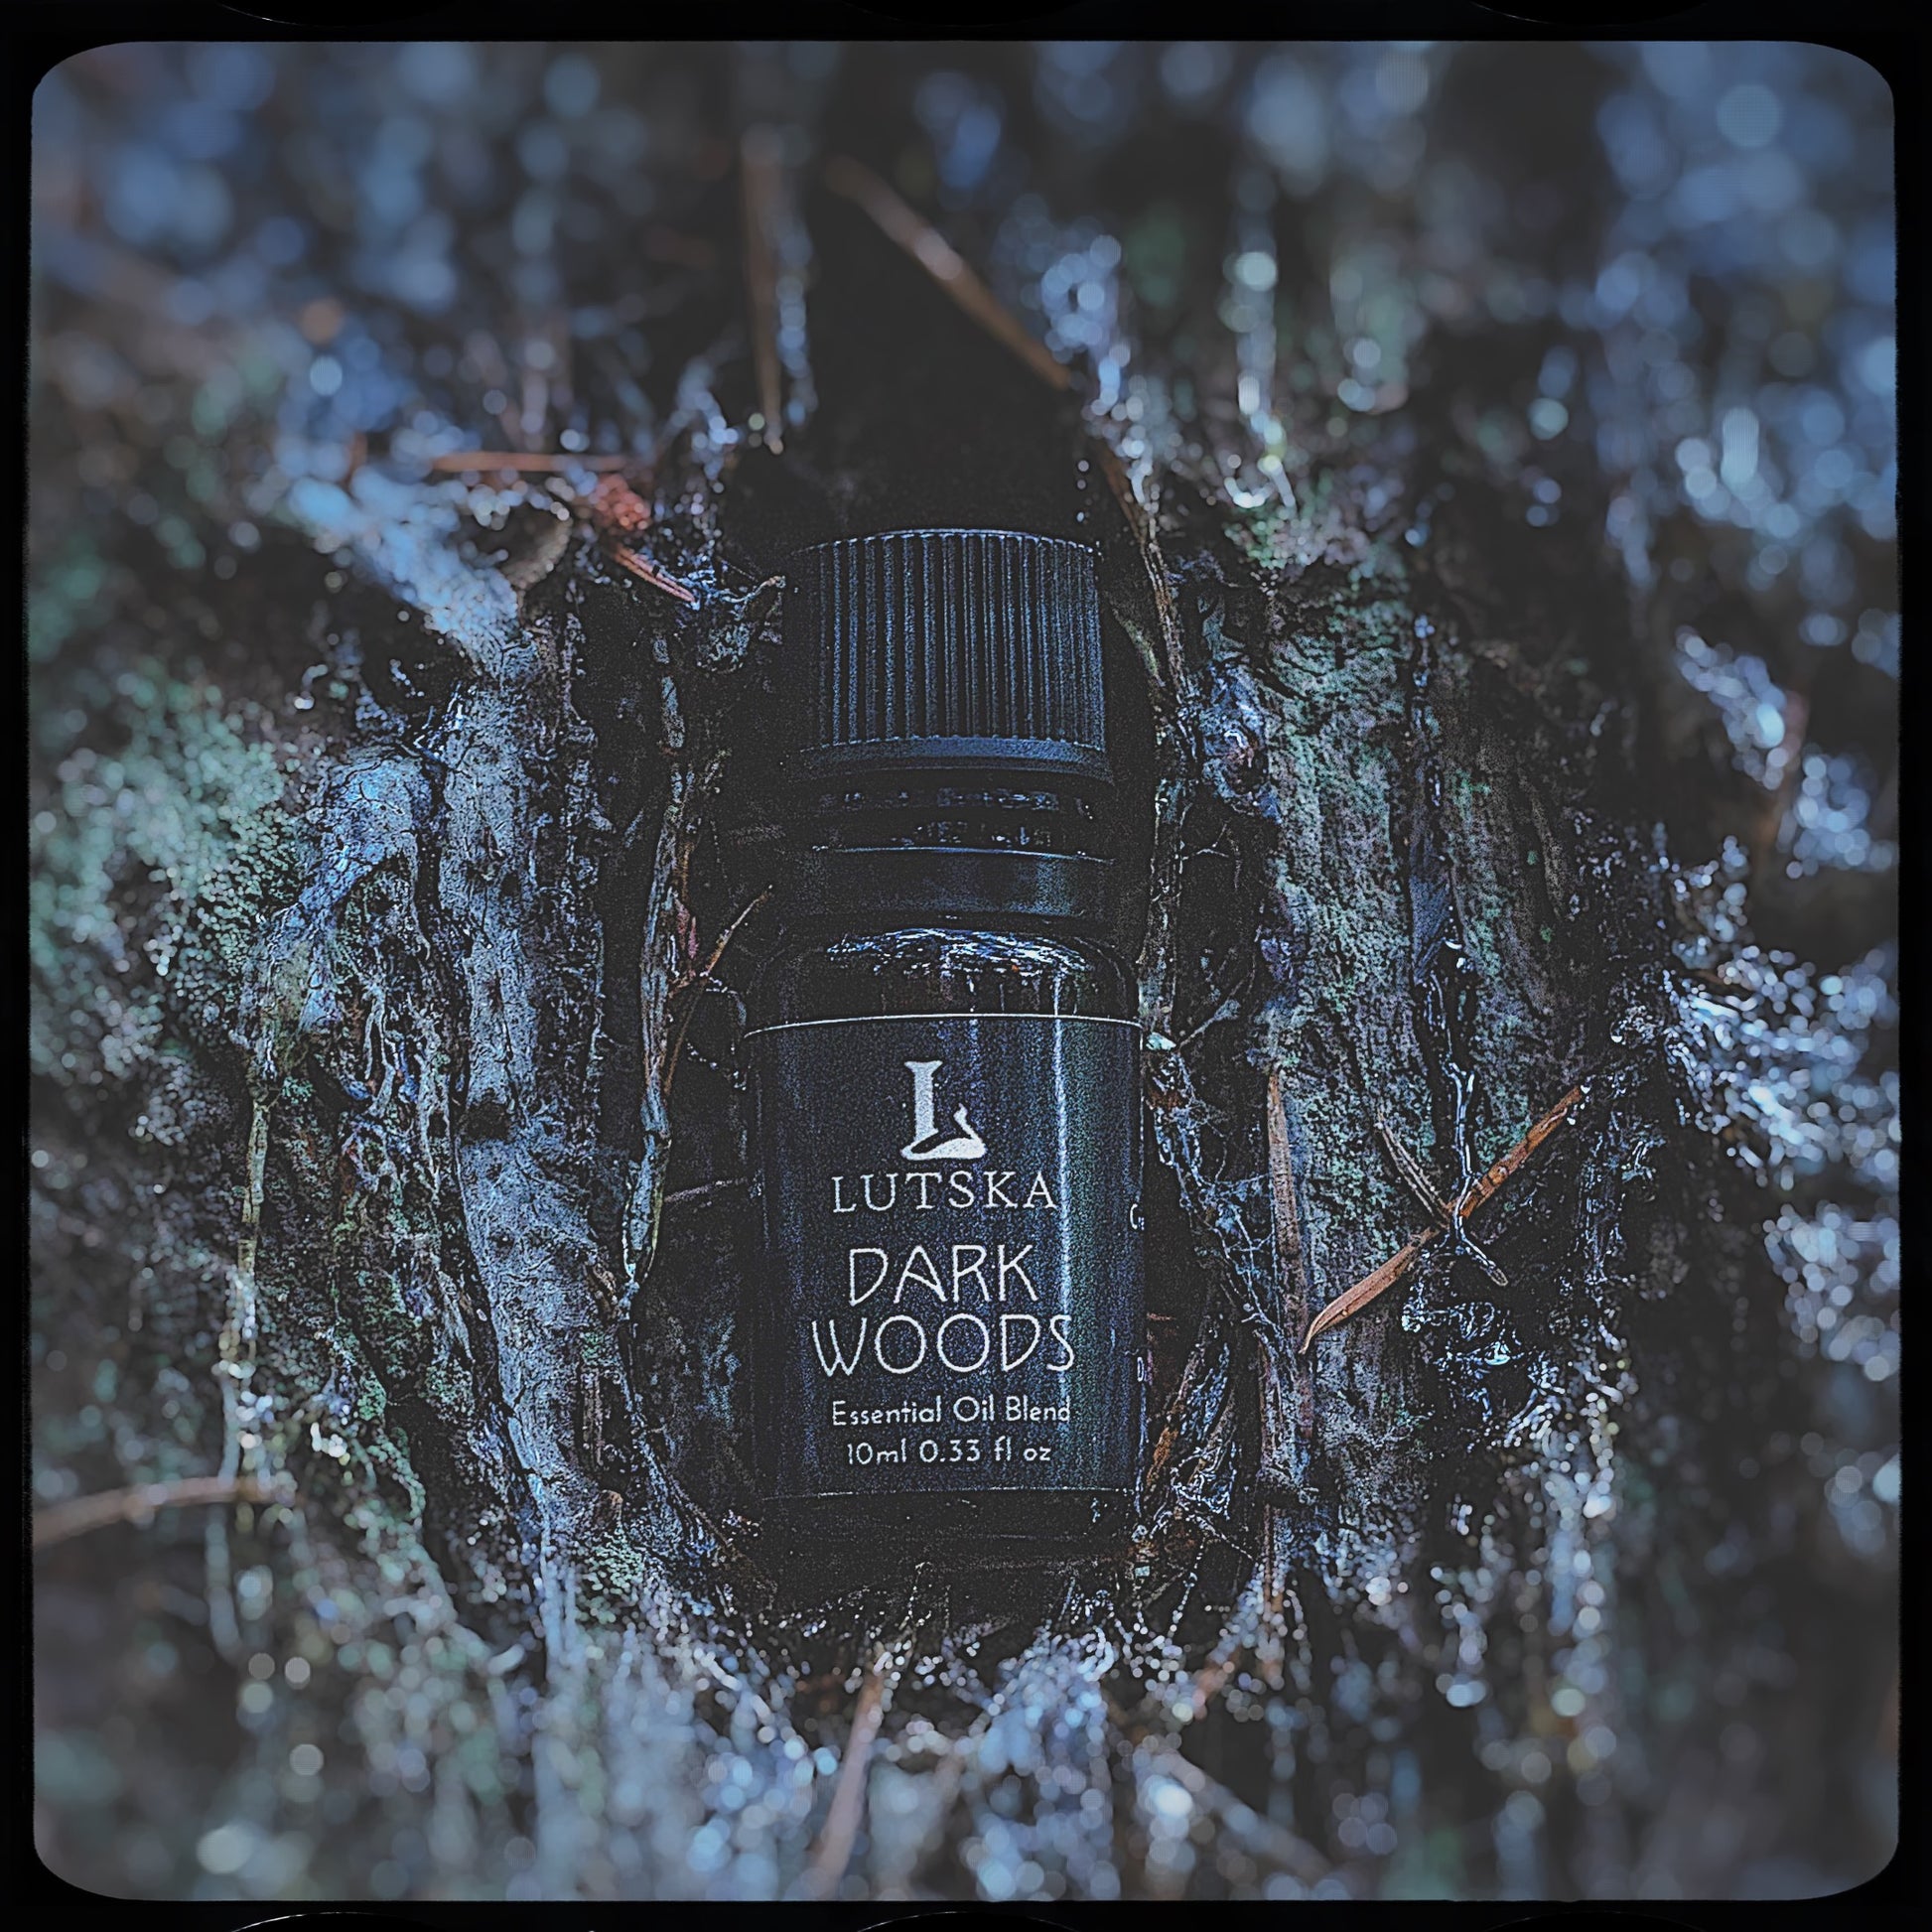 Darkwoods forest bathing essential oil blend